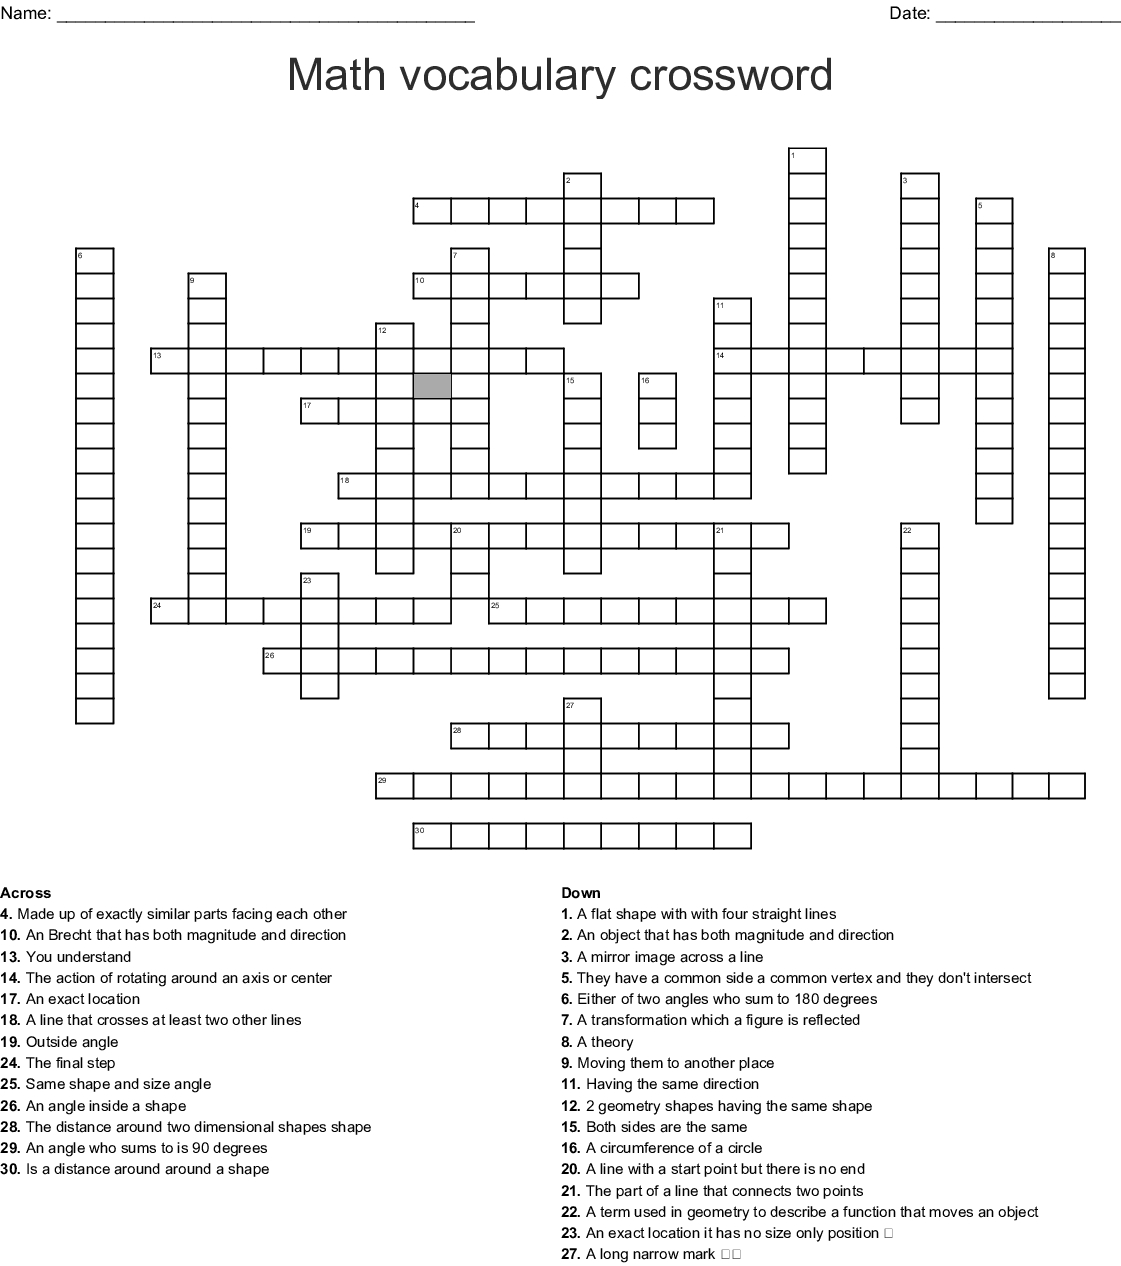 Math Vocabulary Crossword - Wordmint - Printable Math Vocabulary Crossword Puzzles